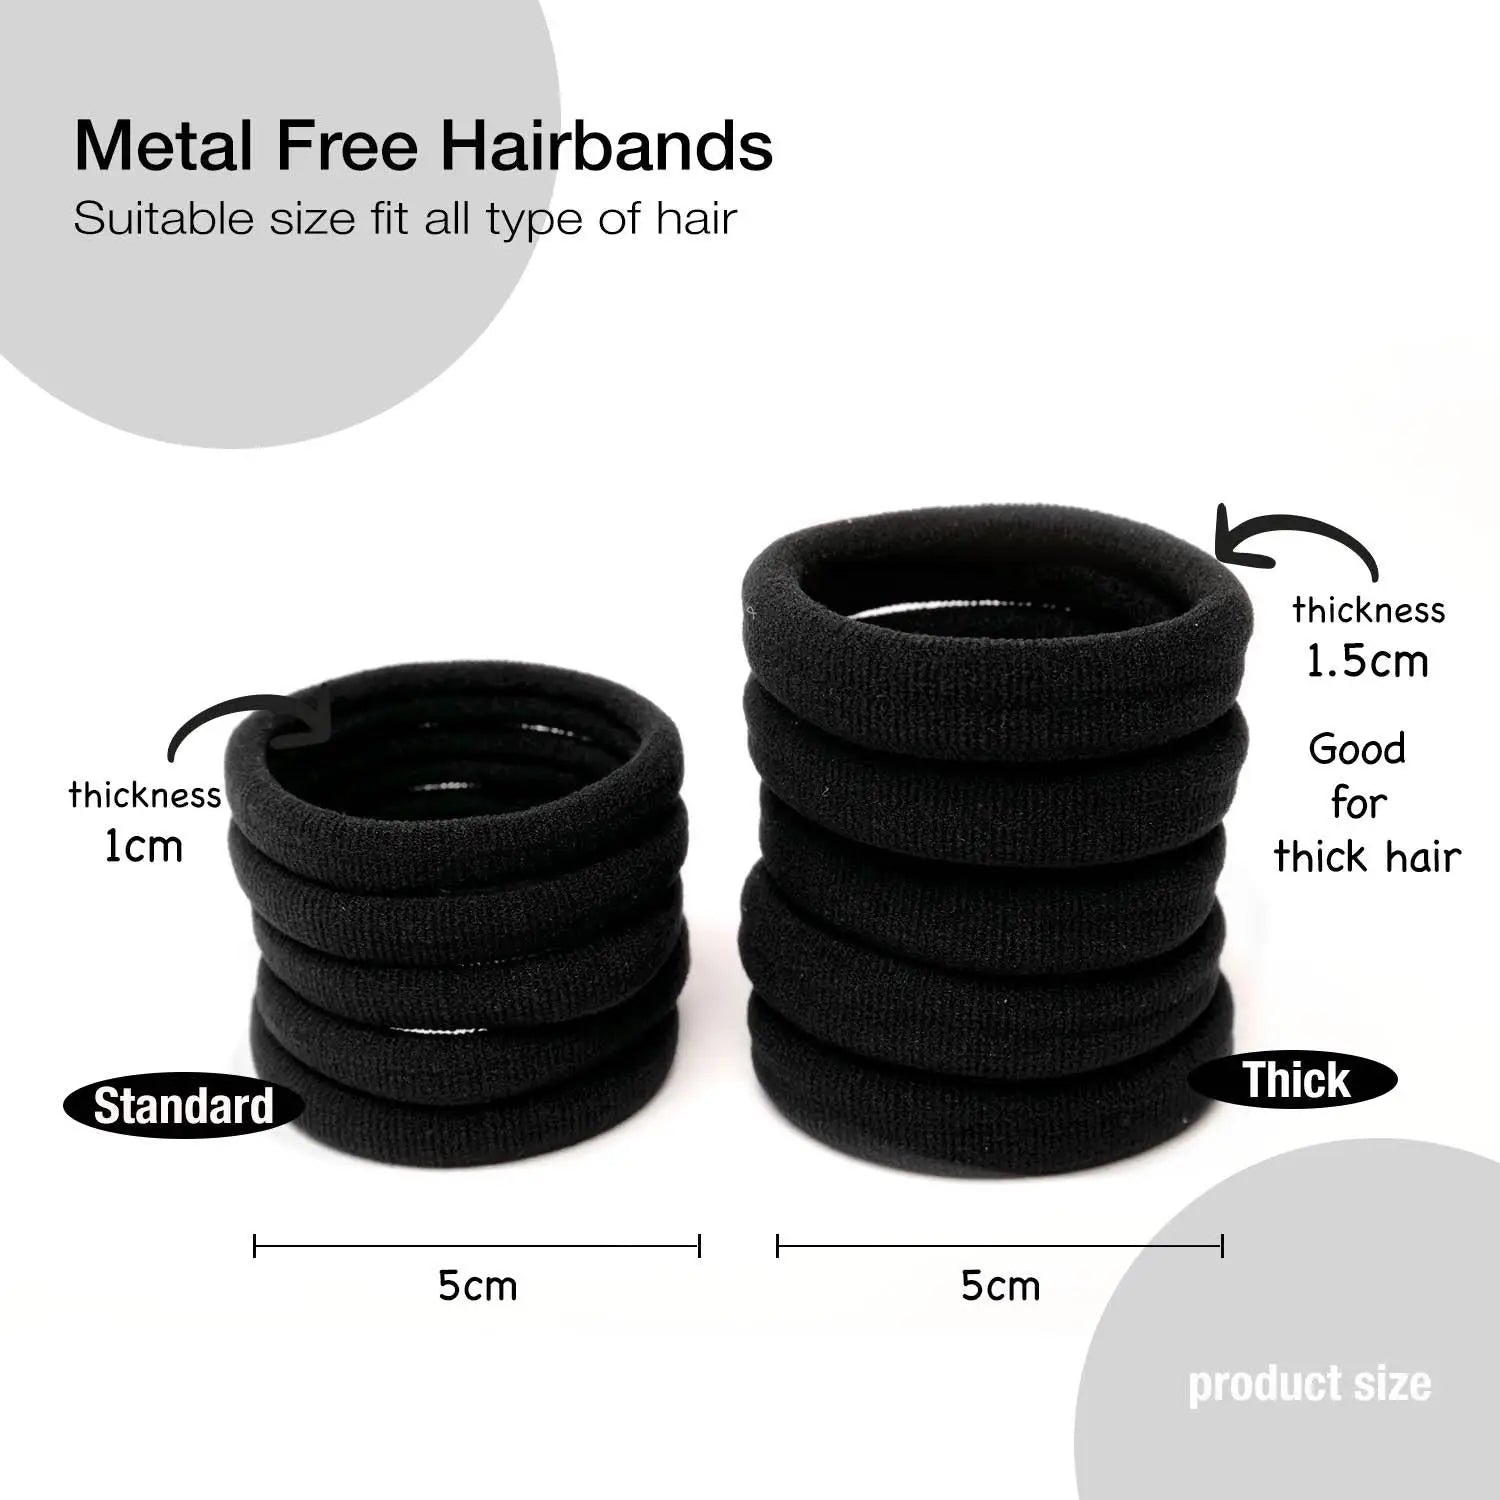 Hair Elastics Tie black hair bands with measurements for basic sense style